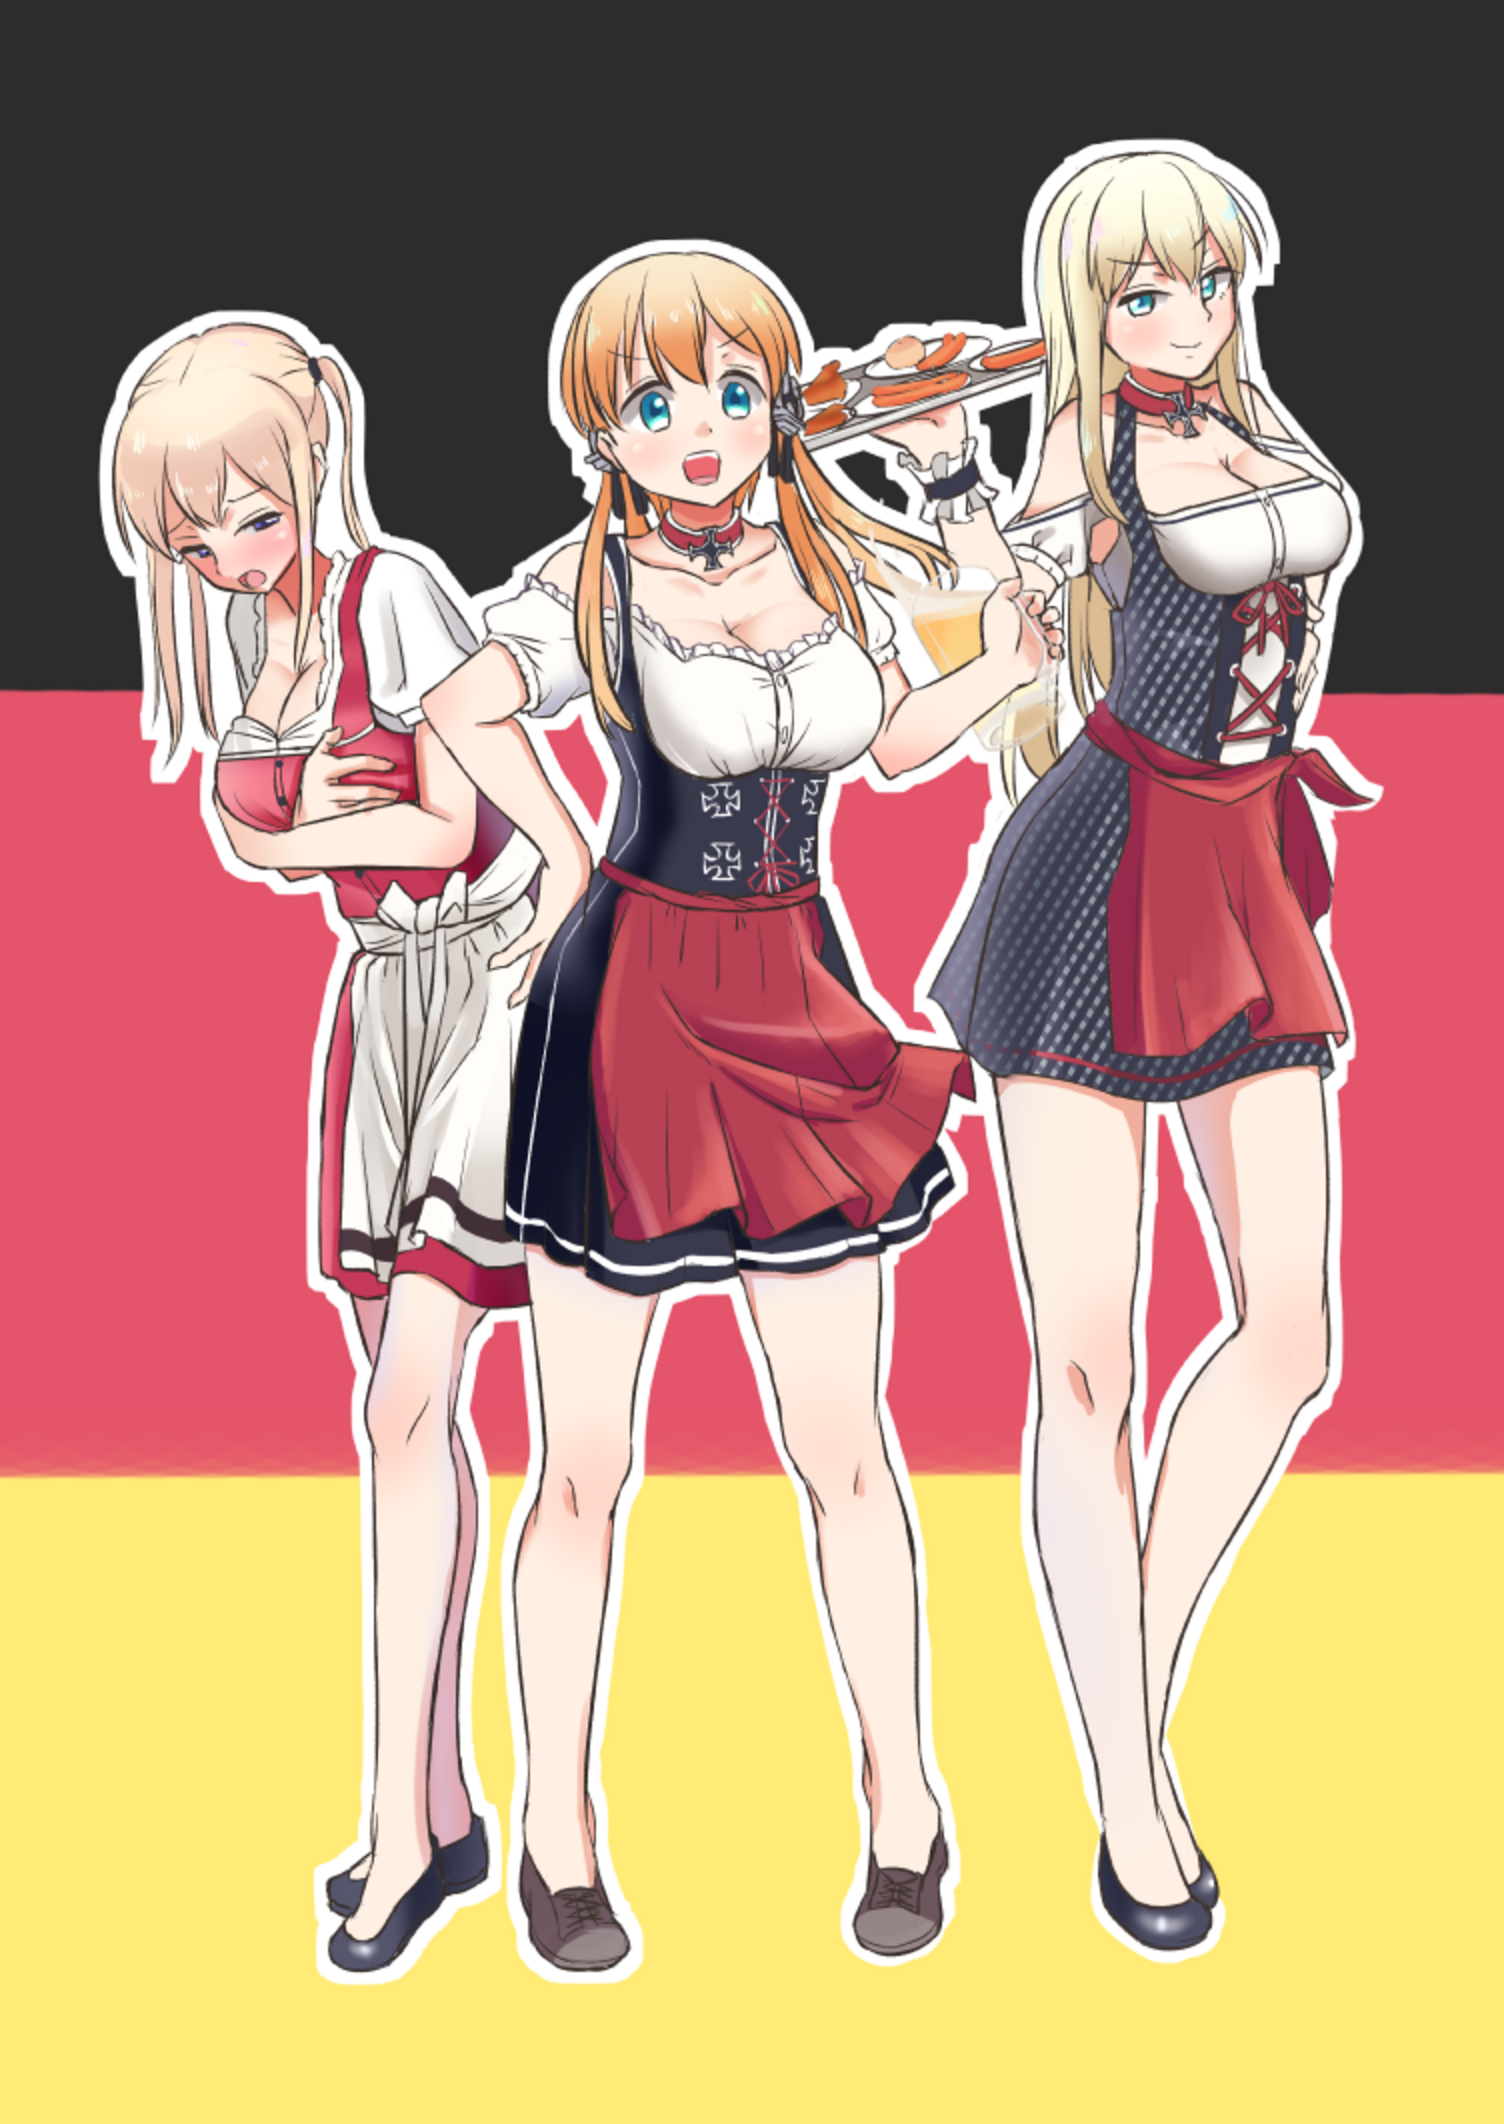 Anime 1504x2124 anime anime girls Kantai Collection Bismarck (KanColle) Graf Zeppelin (KanColle) Prinz Eugen (KanColle) long hair twintails blonde women trio artwork digital art fan art